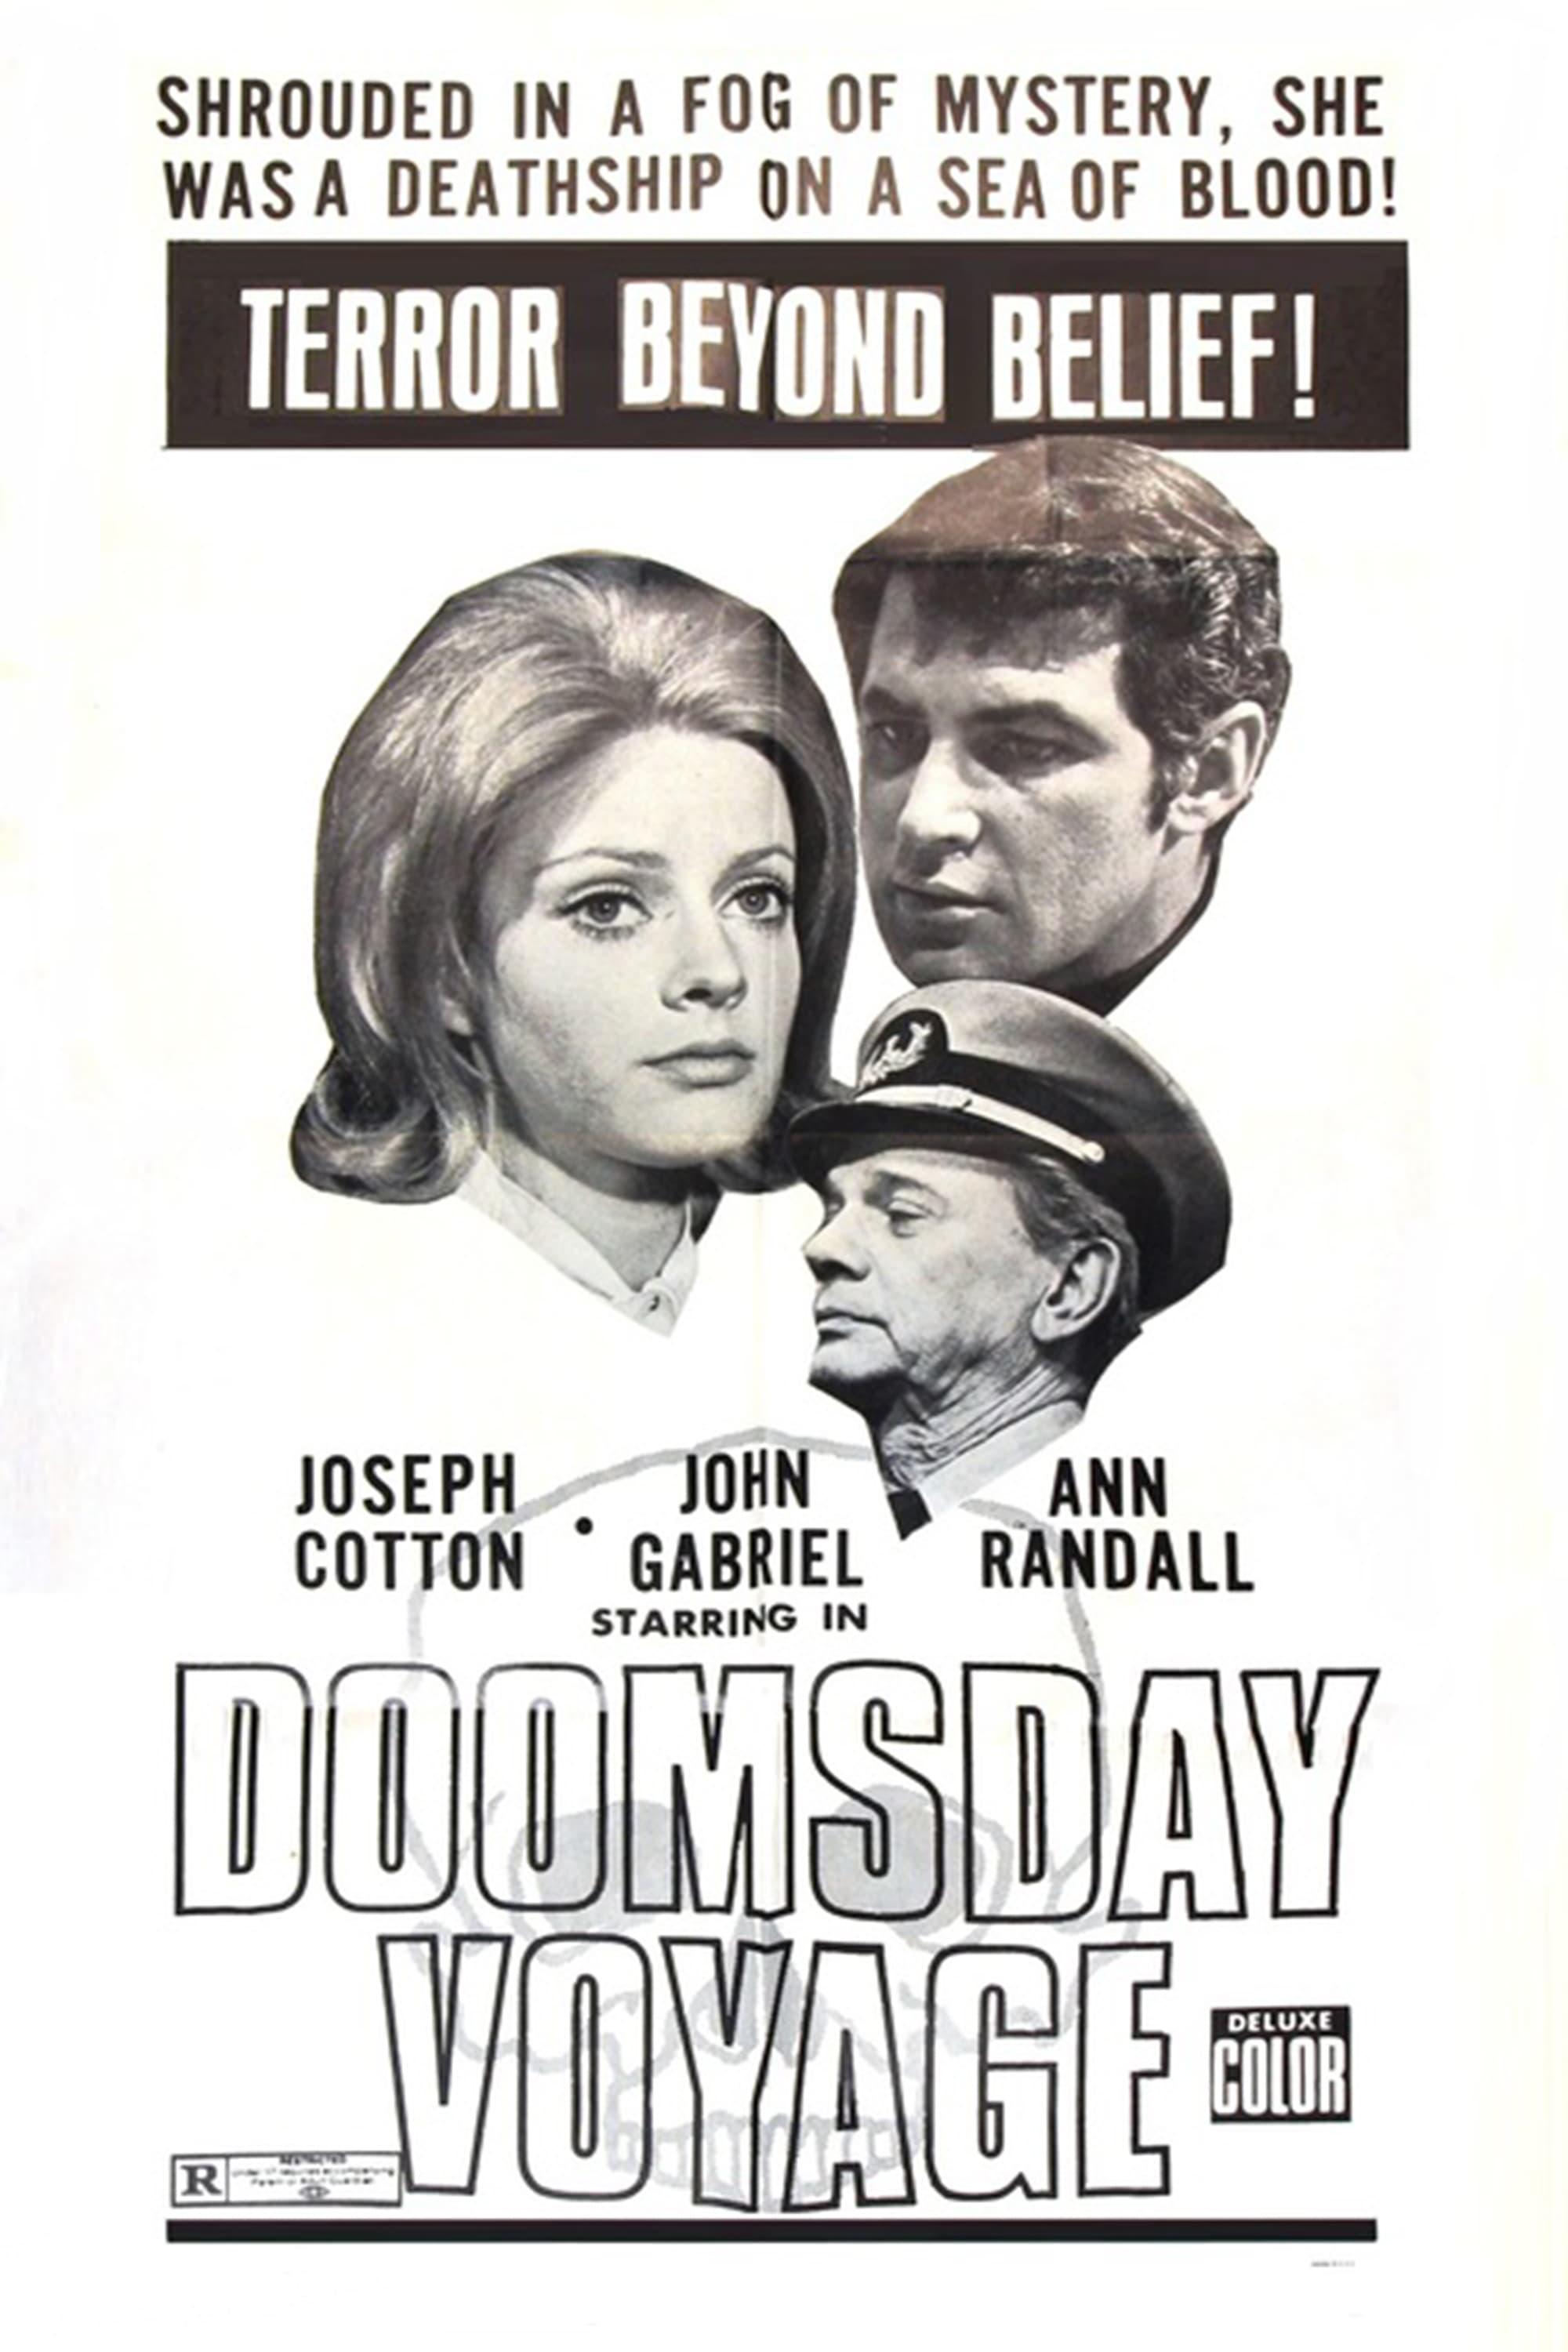 Doomsday Voyage poster